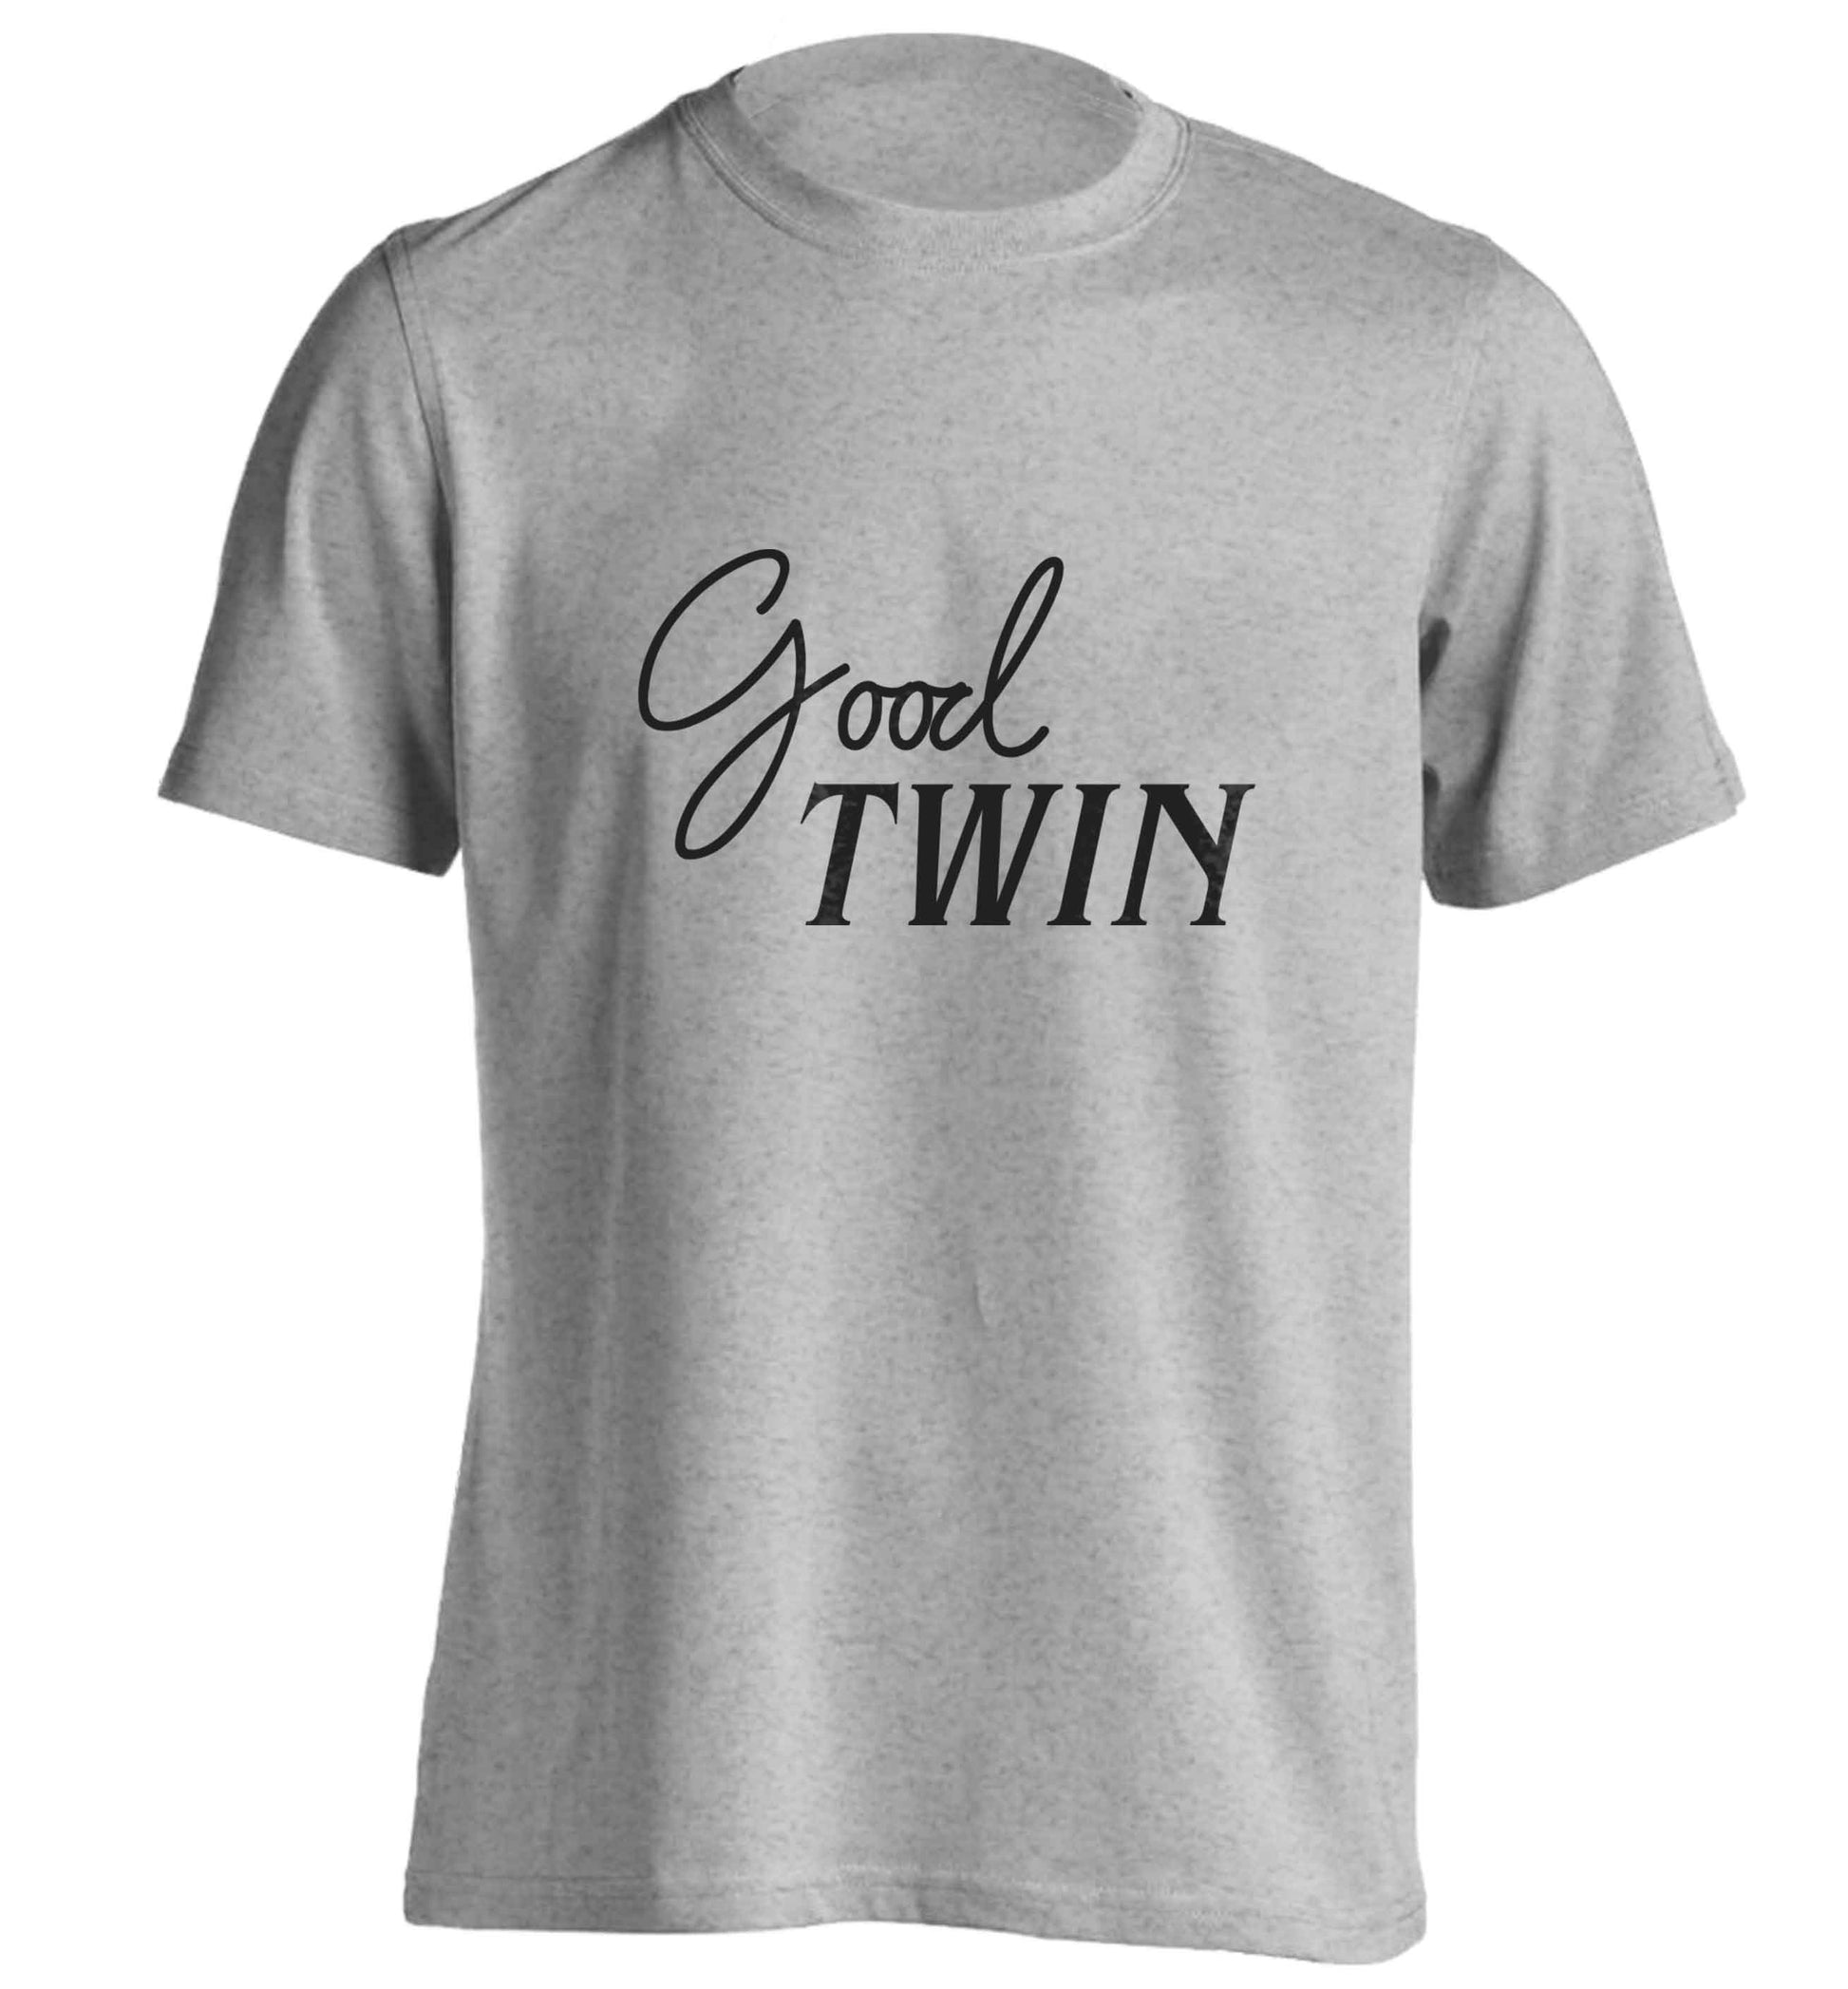 Good twin adults unisex grey Tshirt 2XL